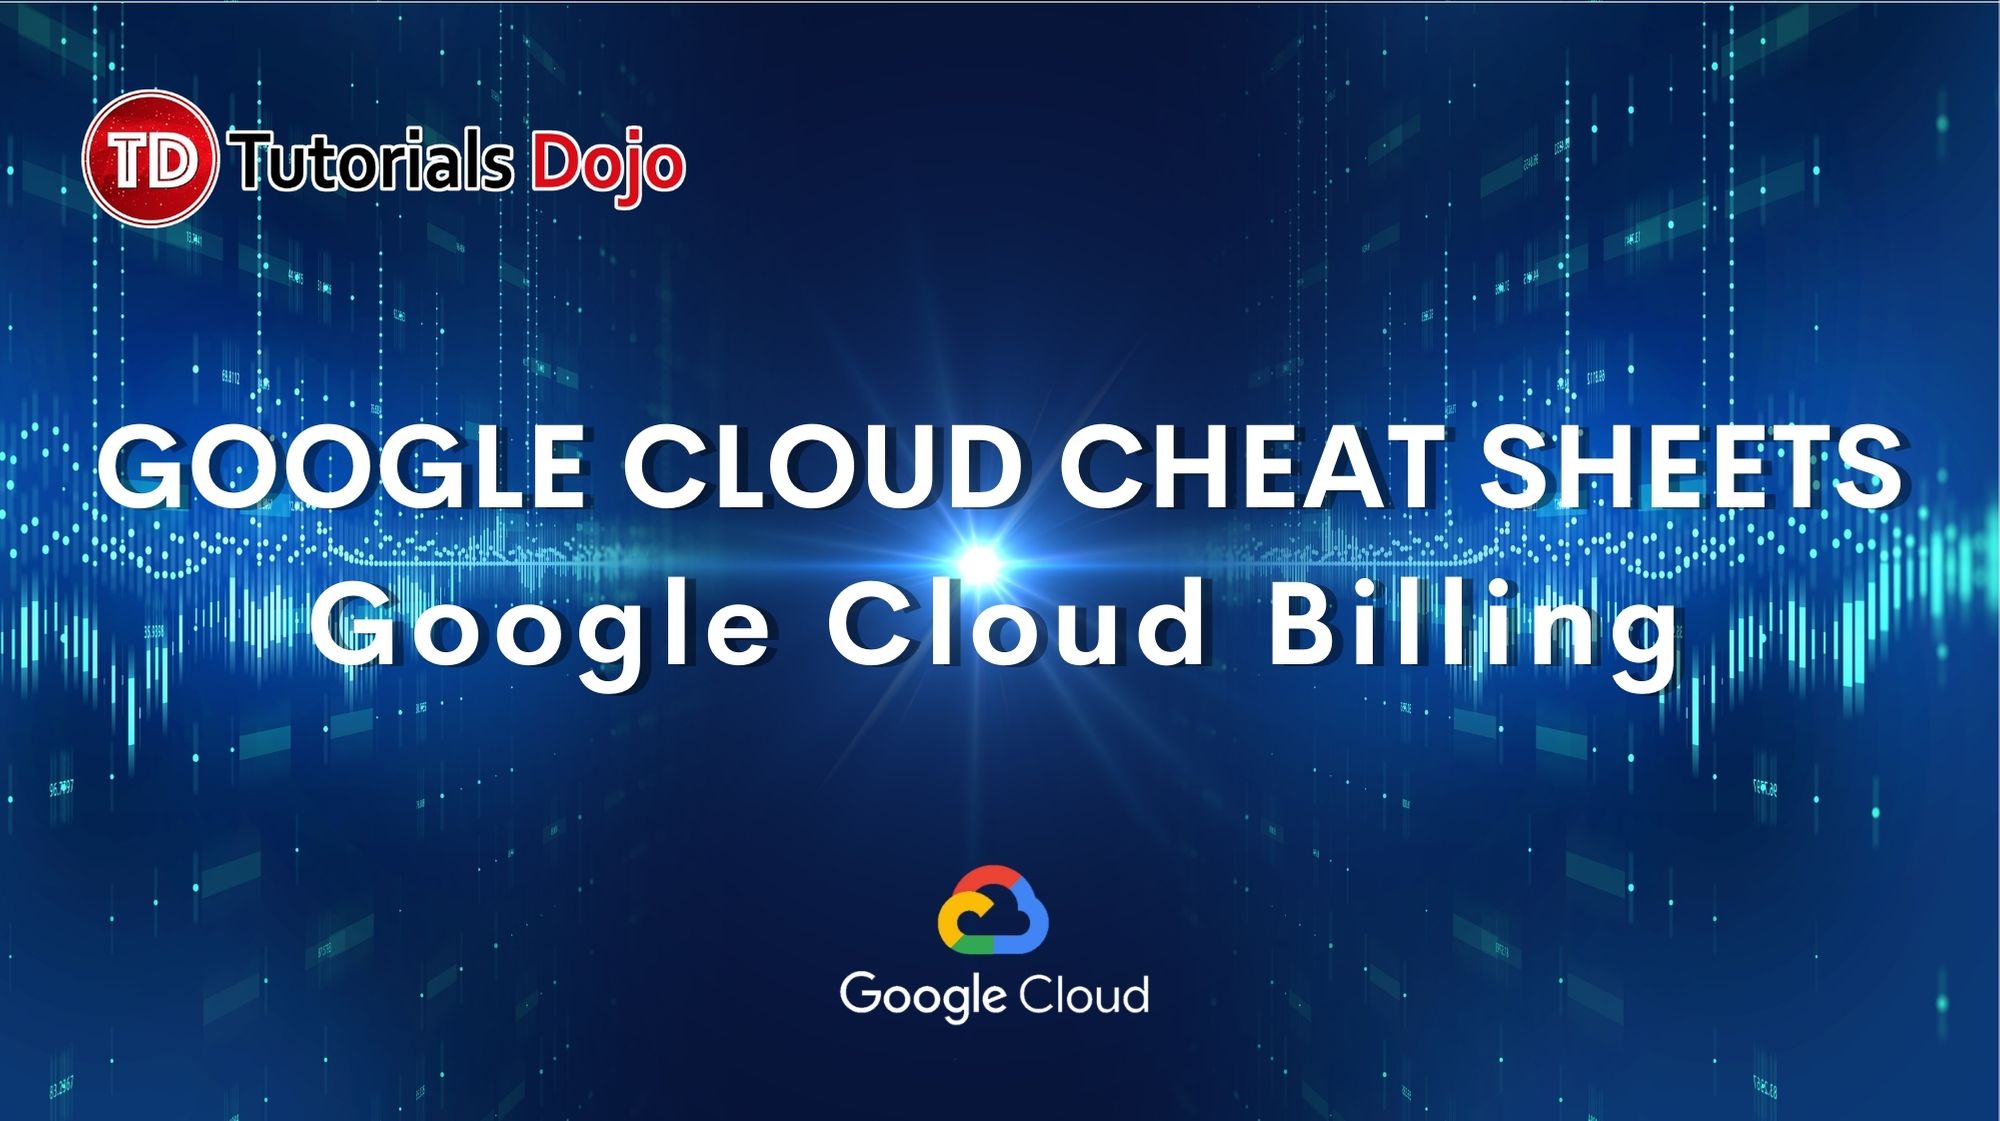 Google Cloud Billing